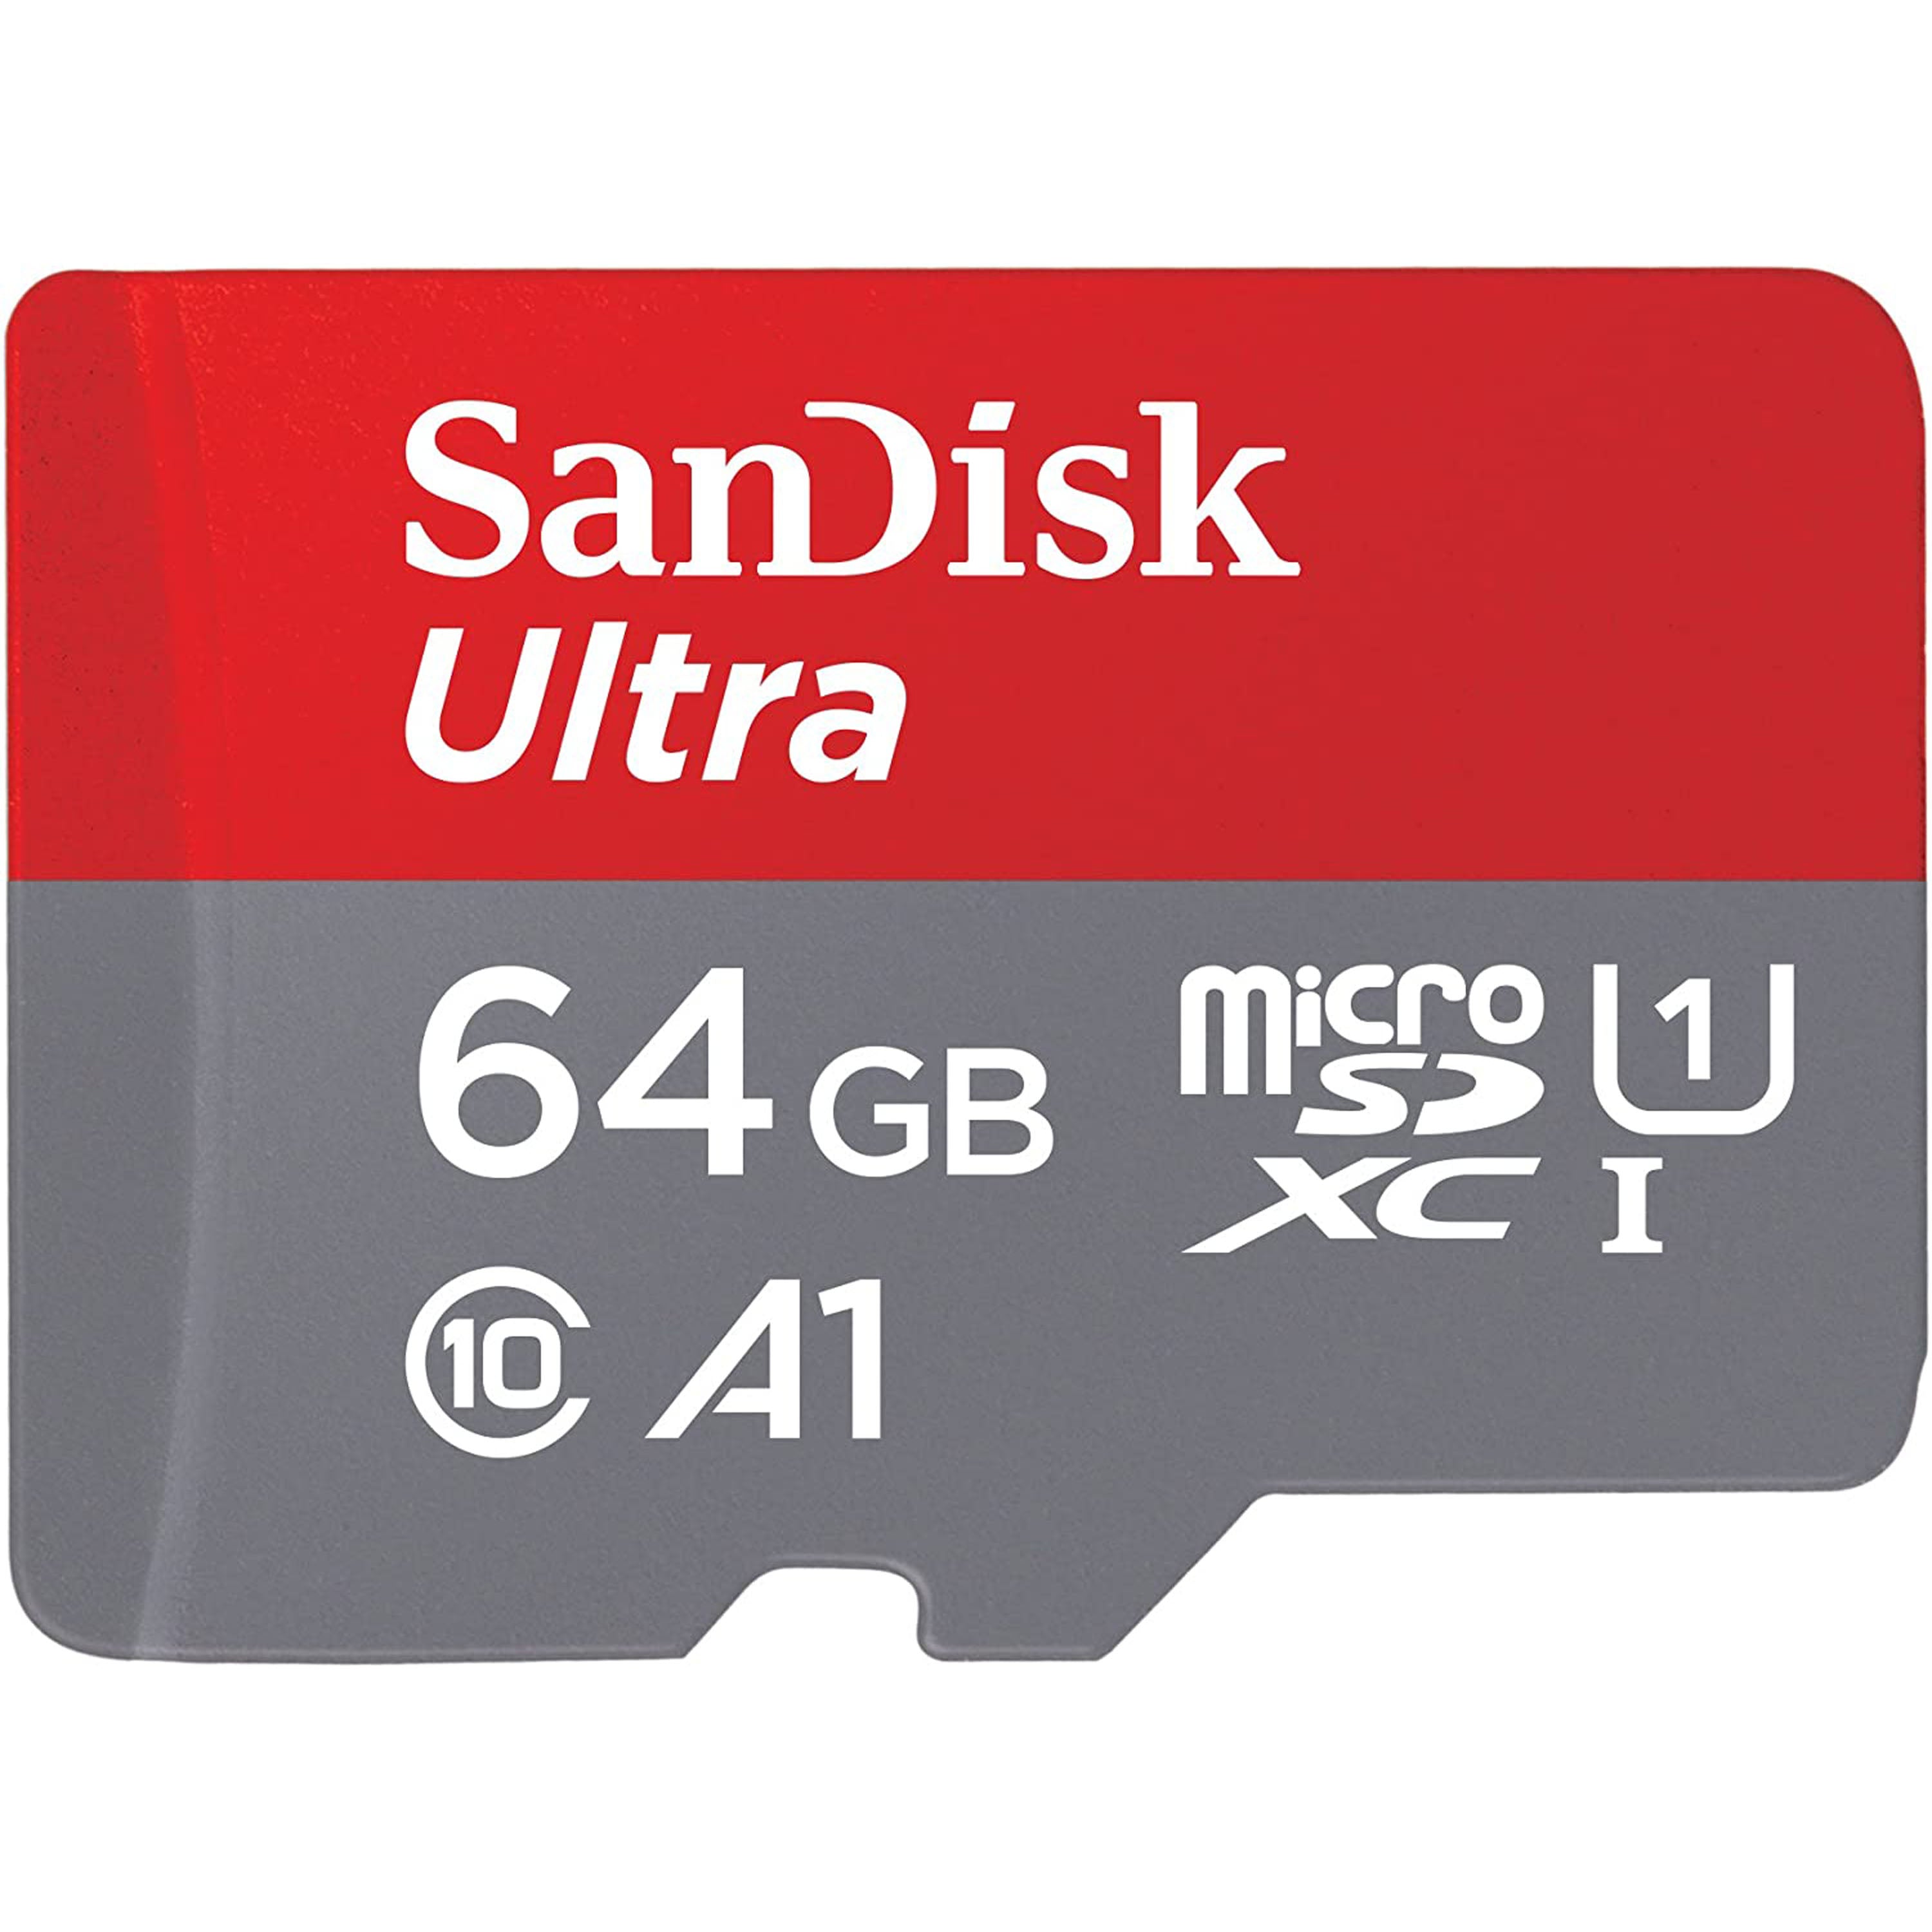 Sandisk Ultra MicroSDXC 64GB 120MB/s UHS-I